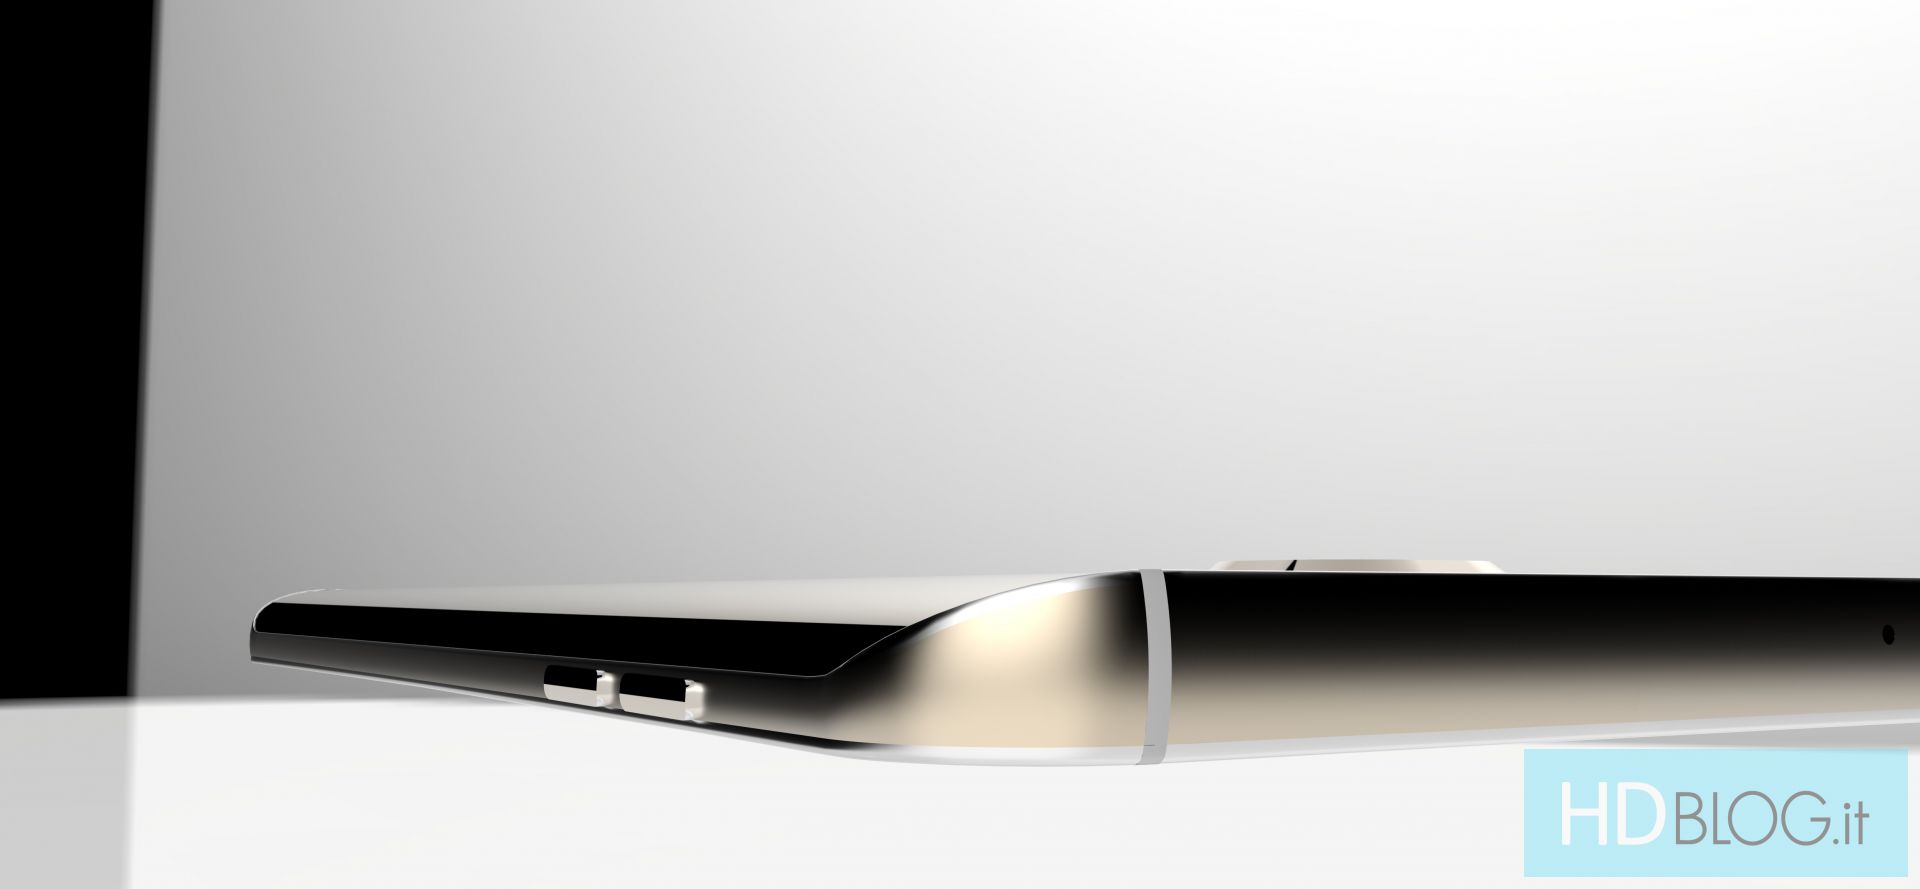 Galaxy Note 5 concept render 11